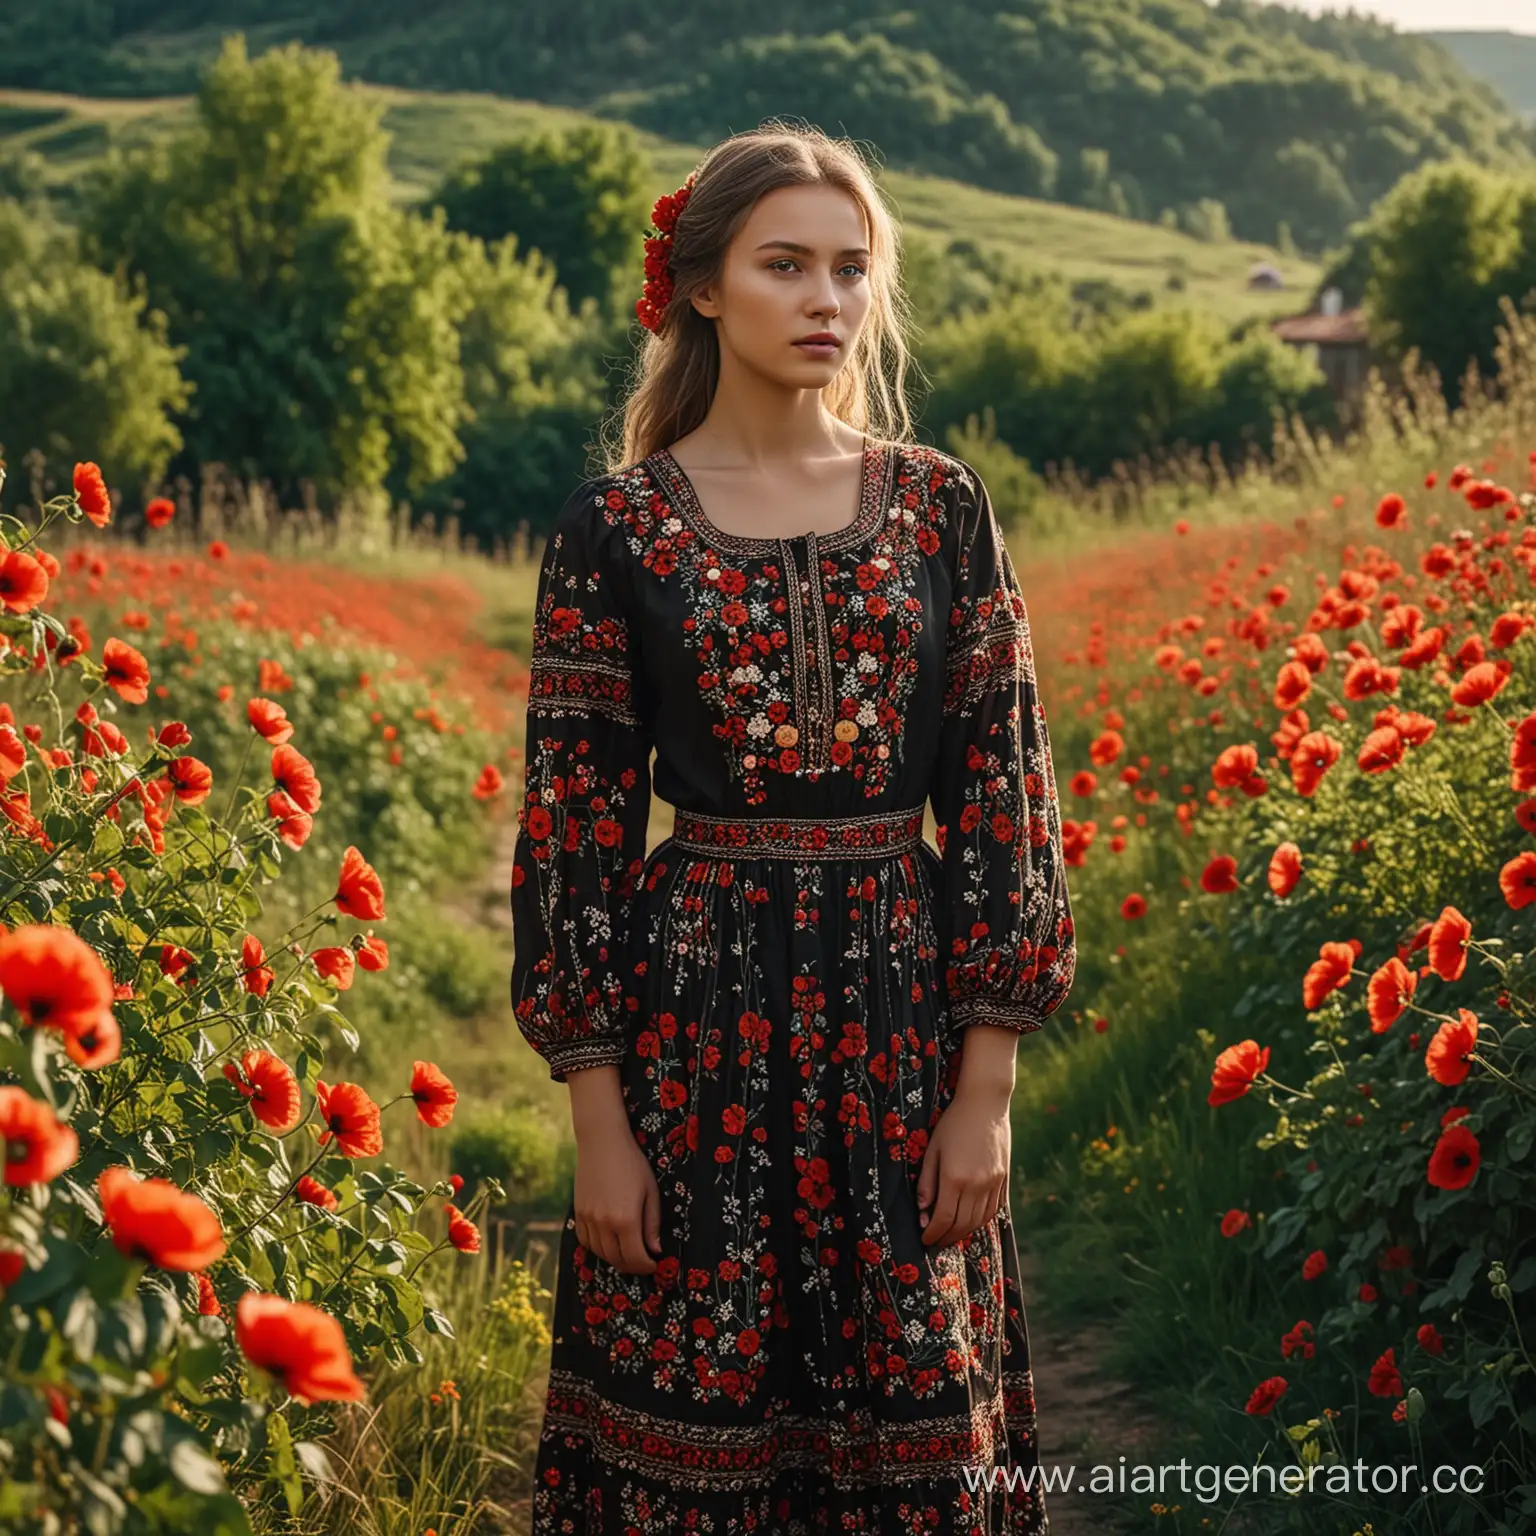 Cinematic-Ukrainian-Girl-in-Embroidered-Dress-Amidst-Rural-Landscape